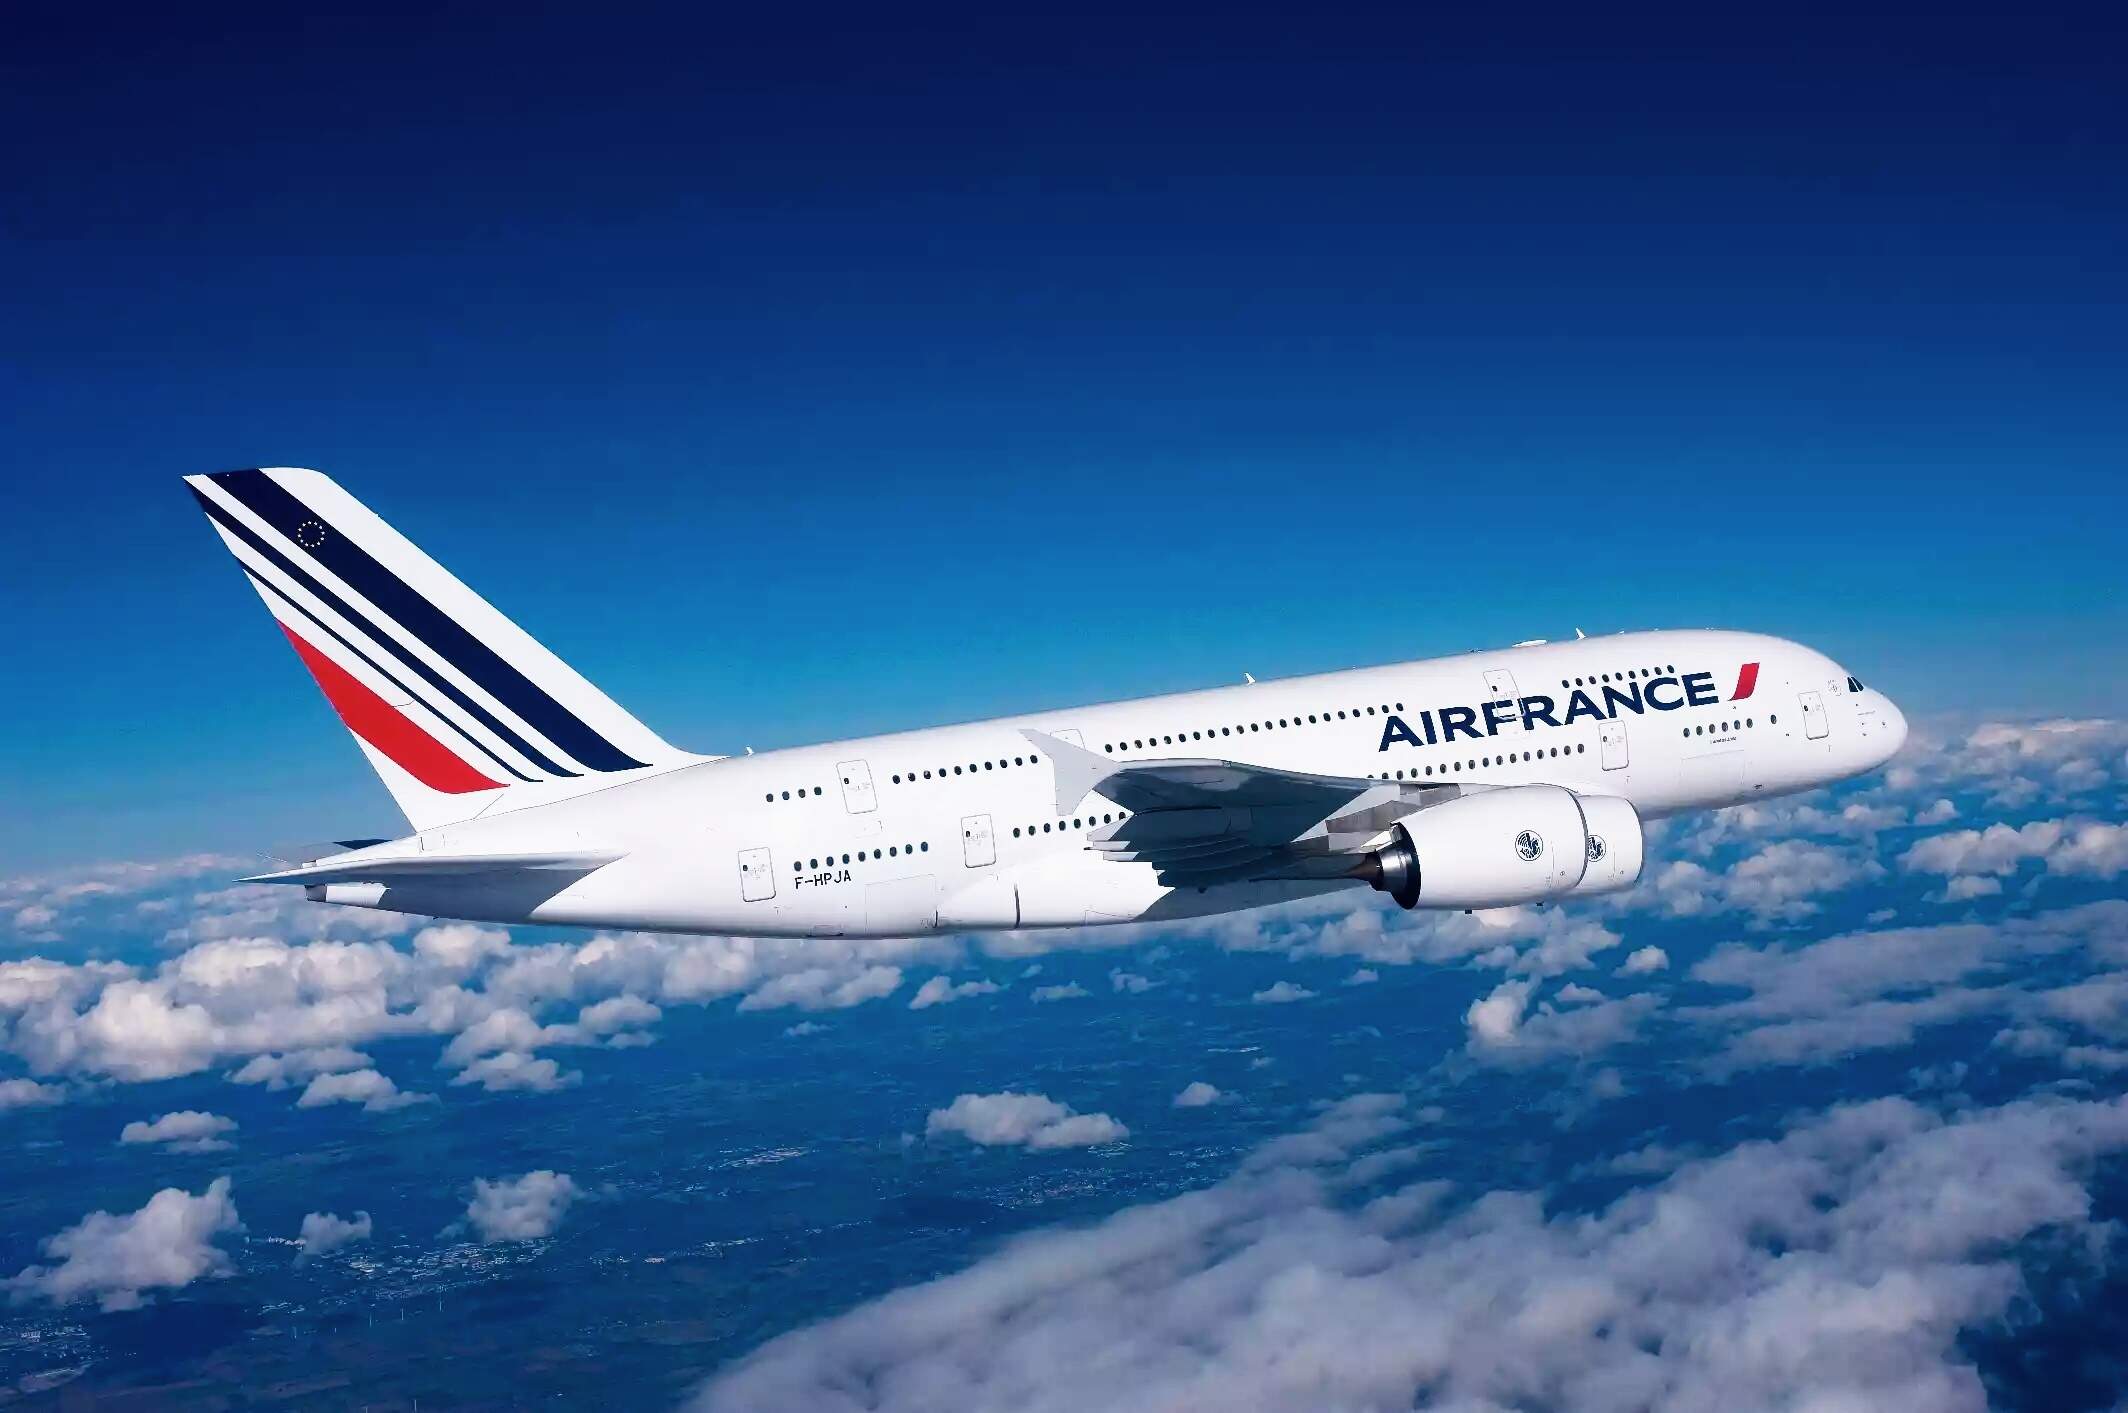 france air travel news